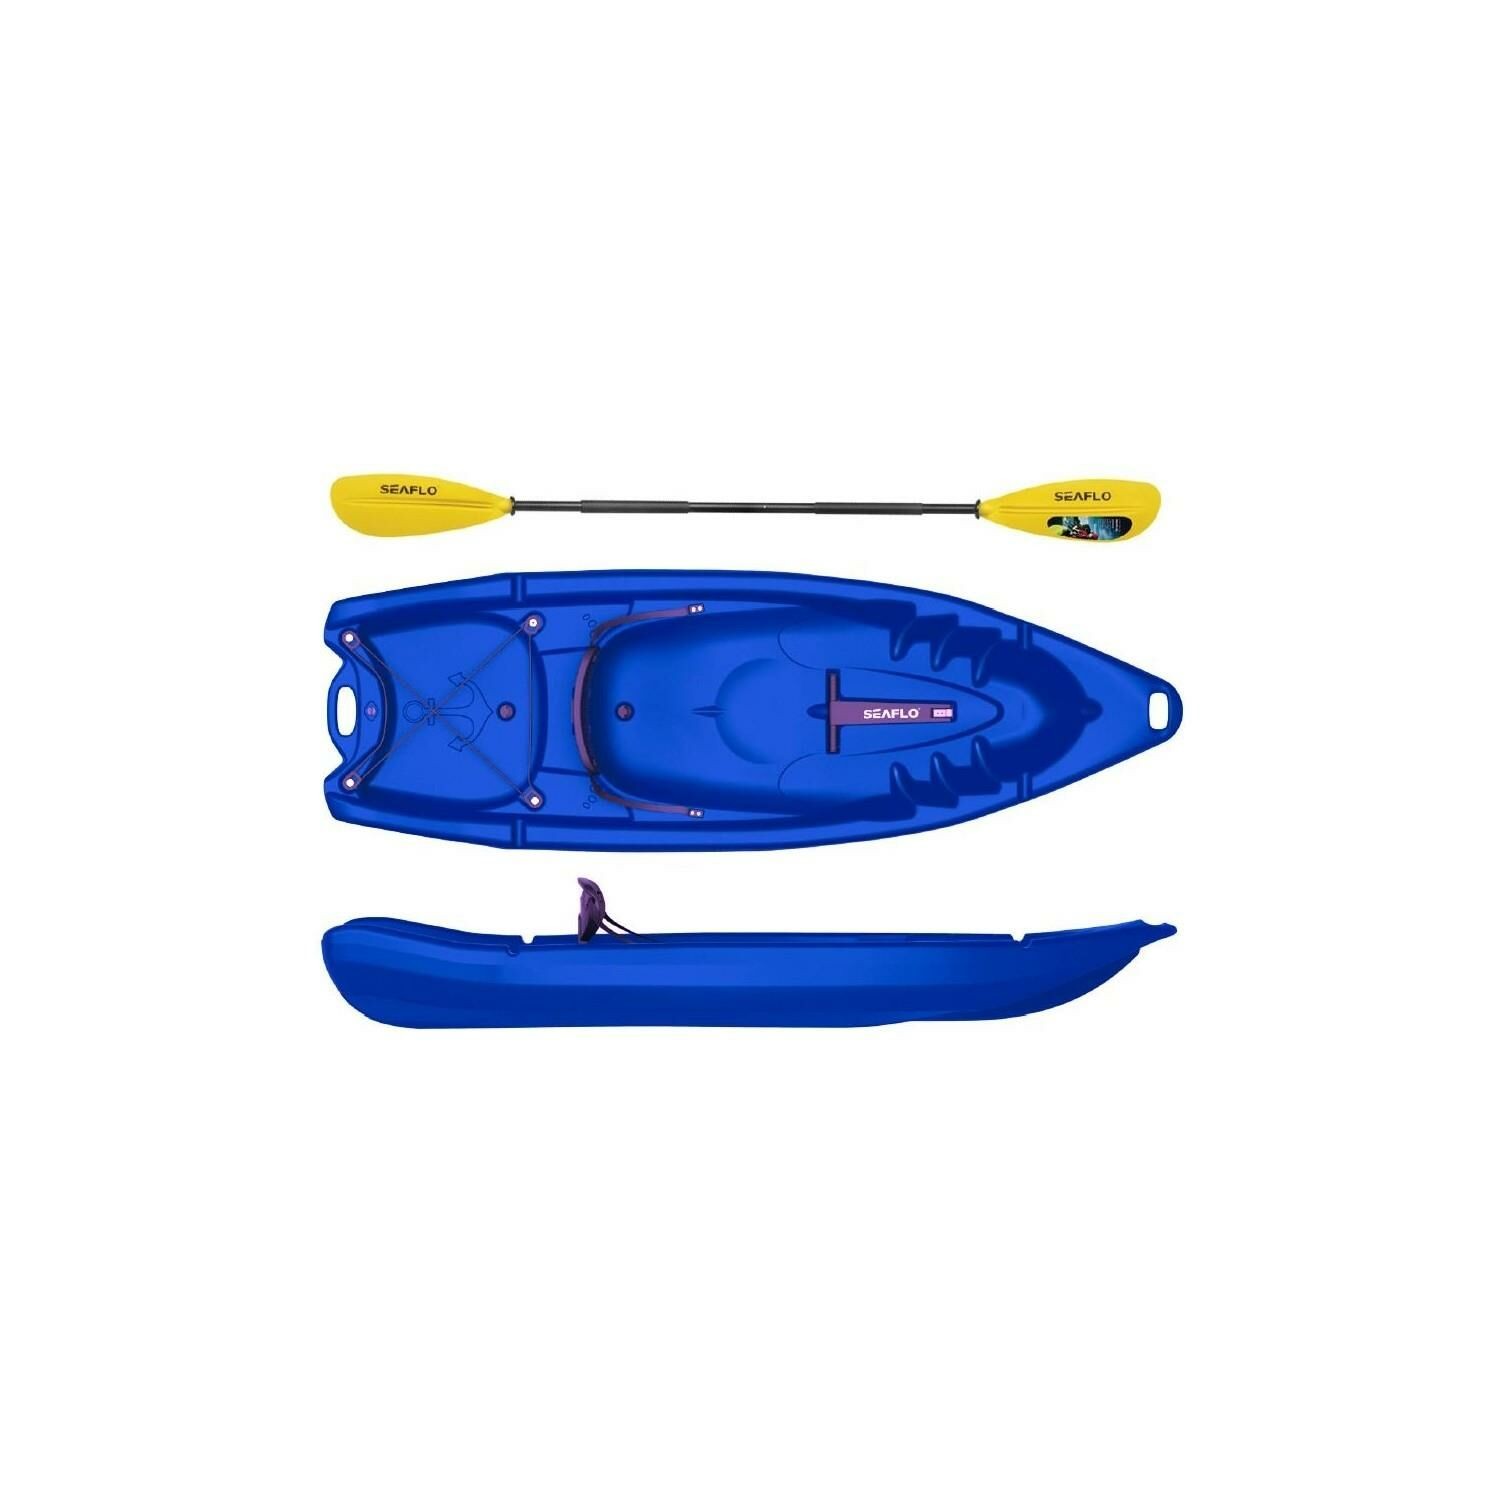 Seaflo SF-2002 Single Adult Canoe Blue